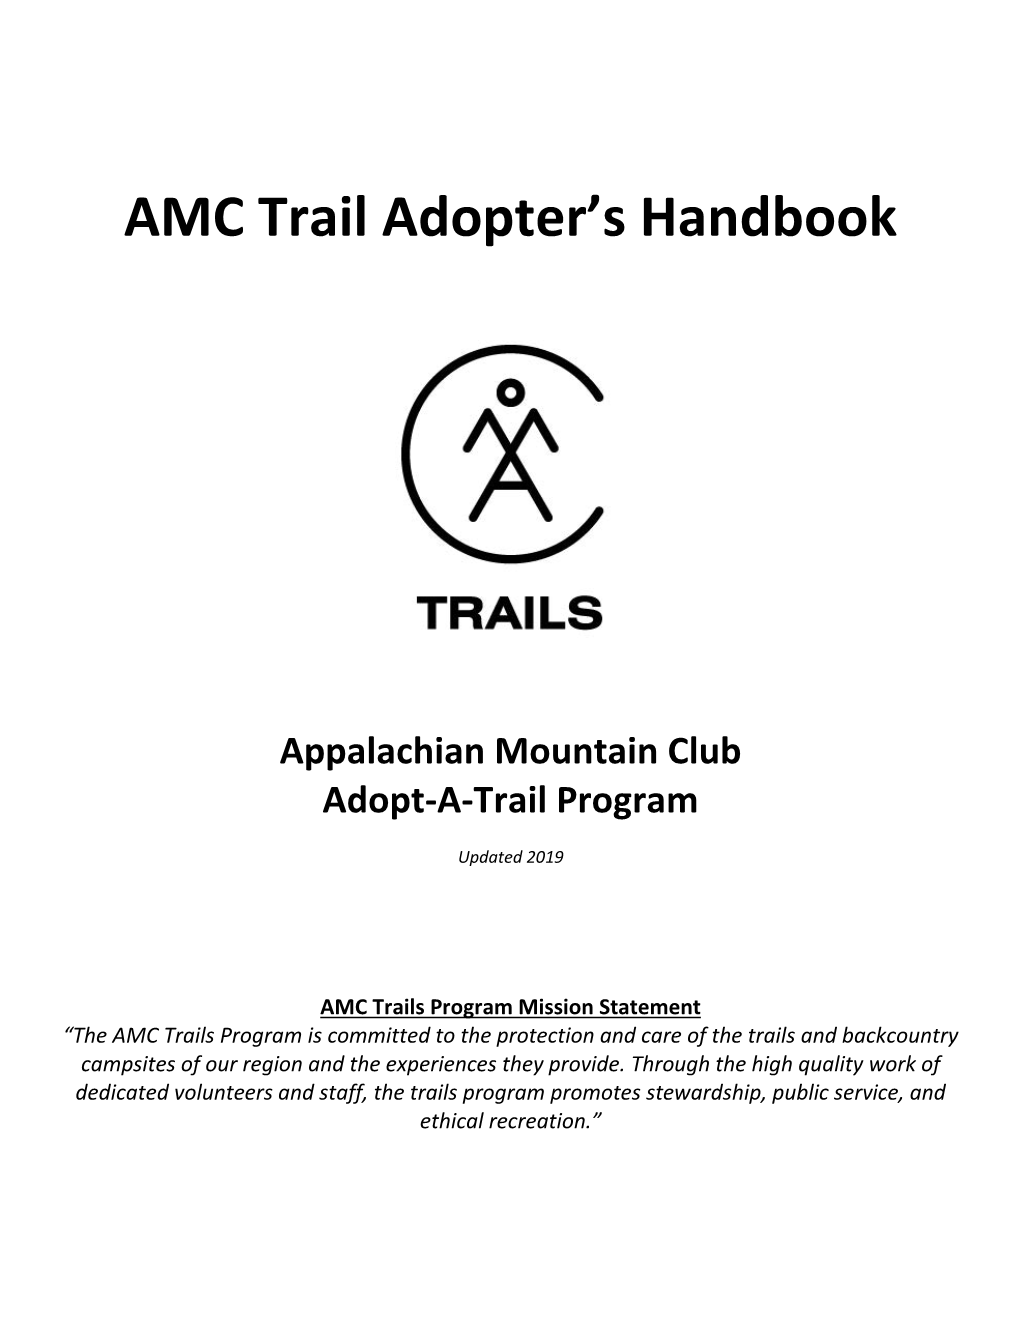 Trail Adopter's Handbook